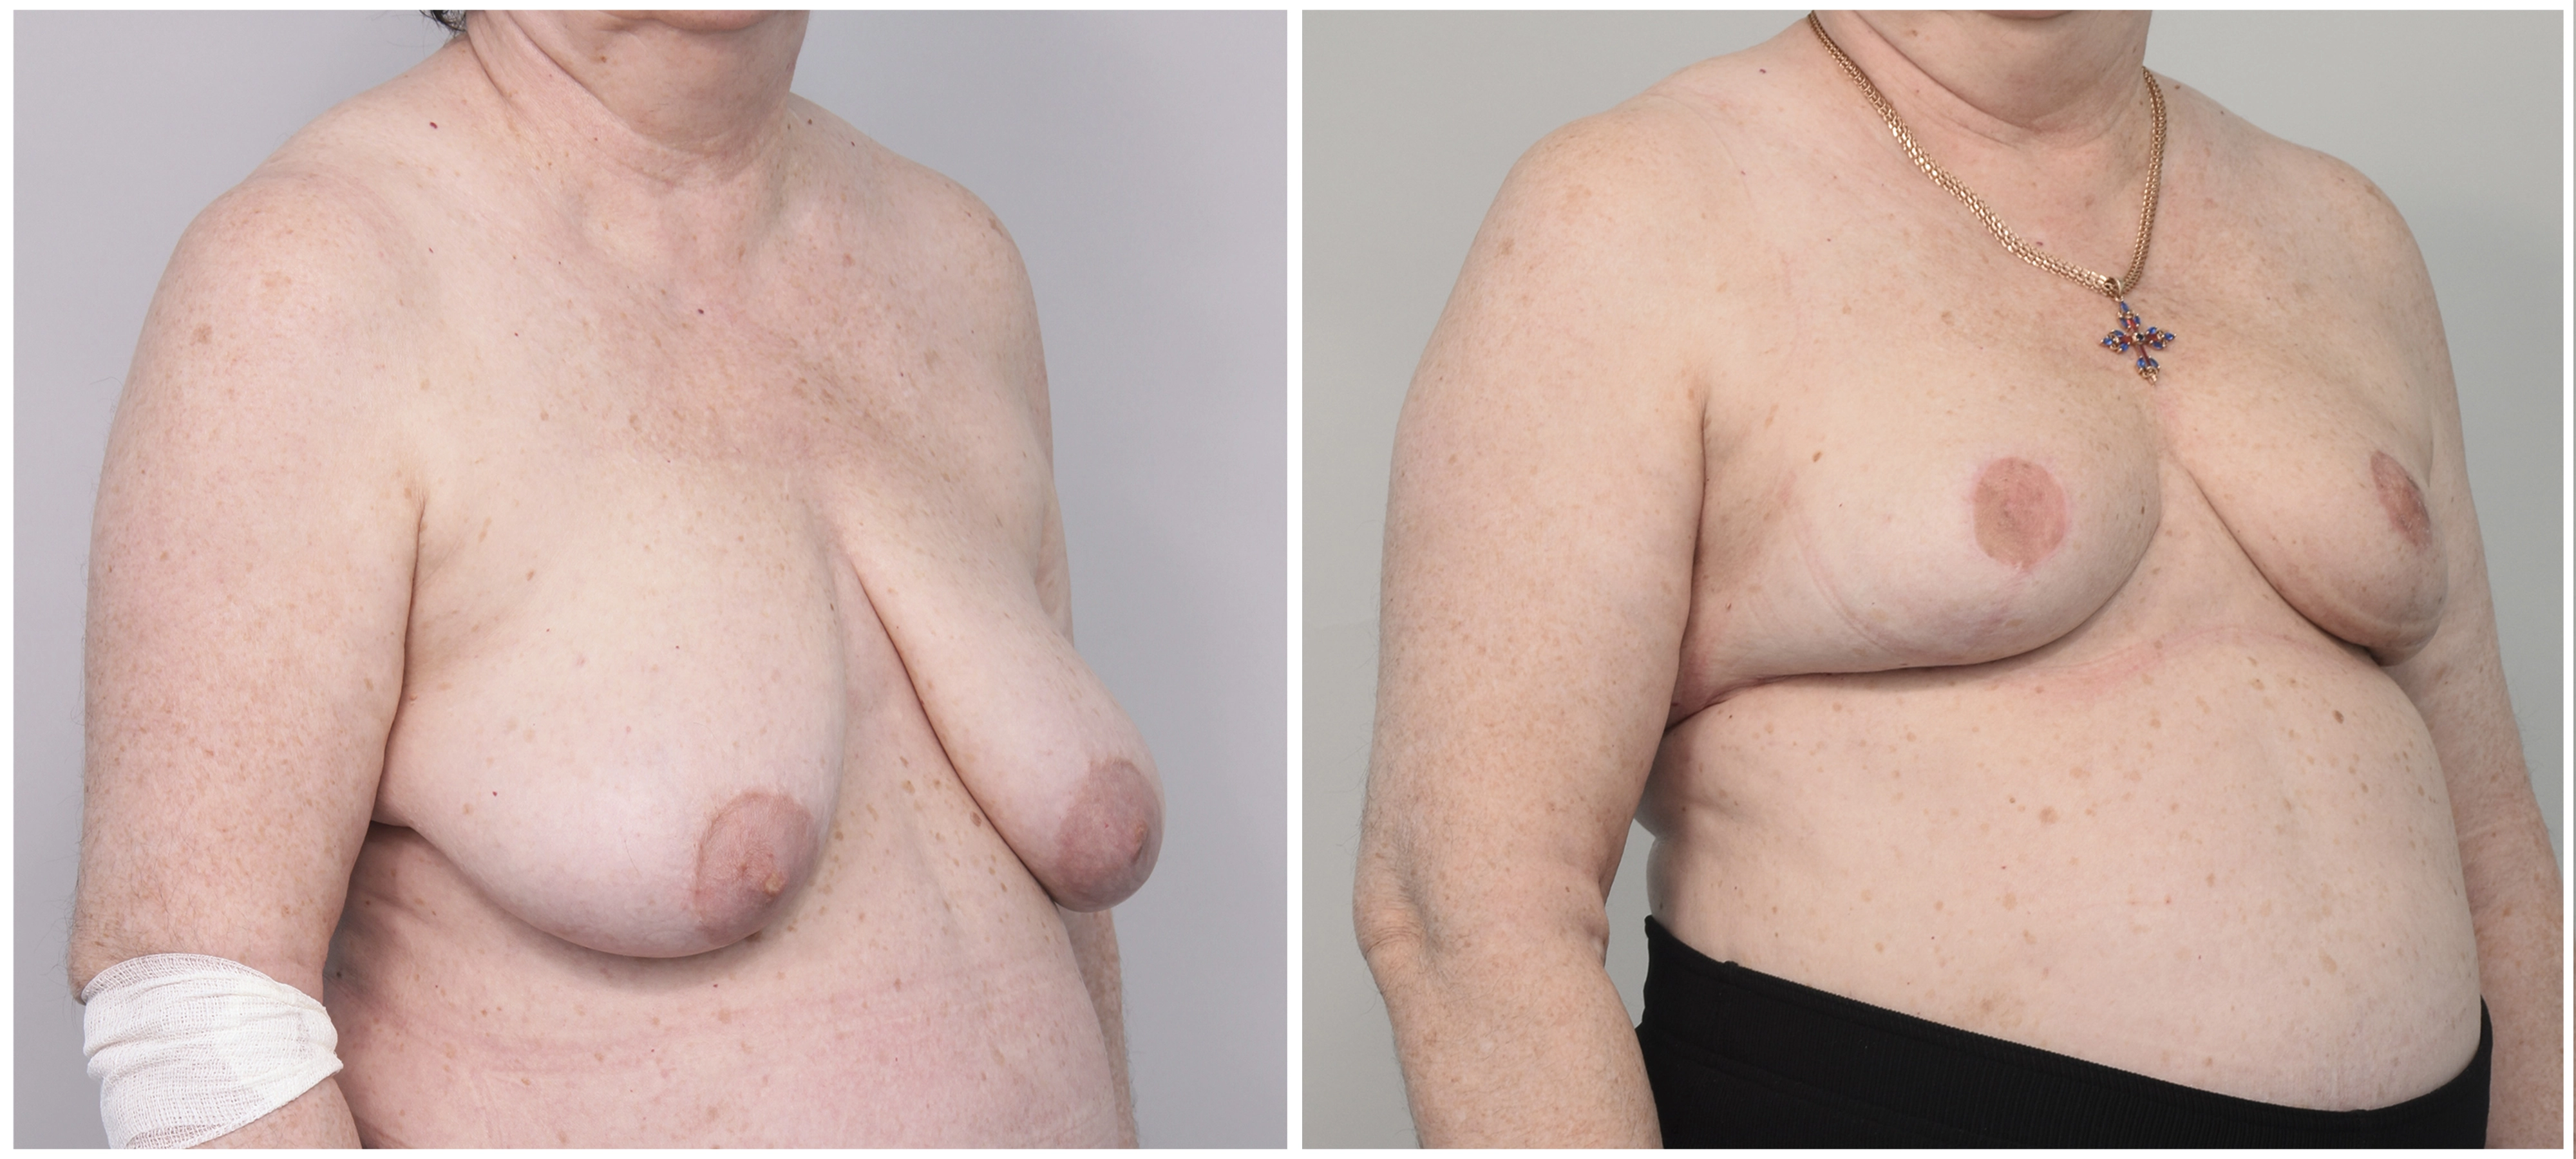 уменьшение груди для мужчин фото 31